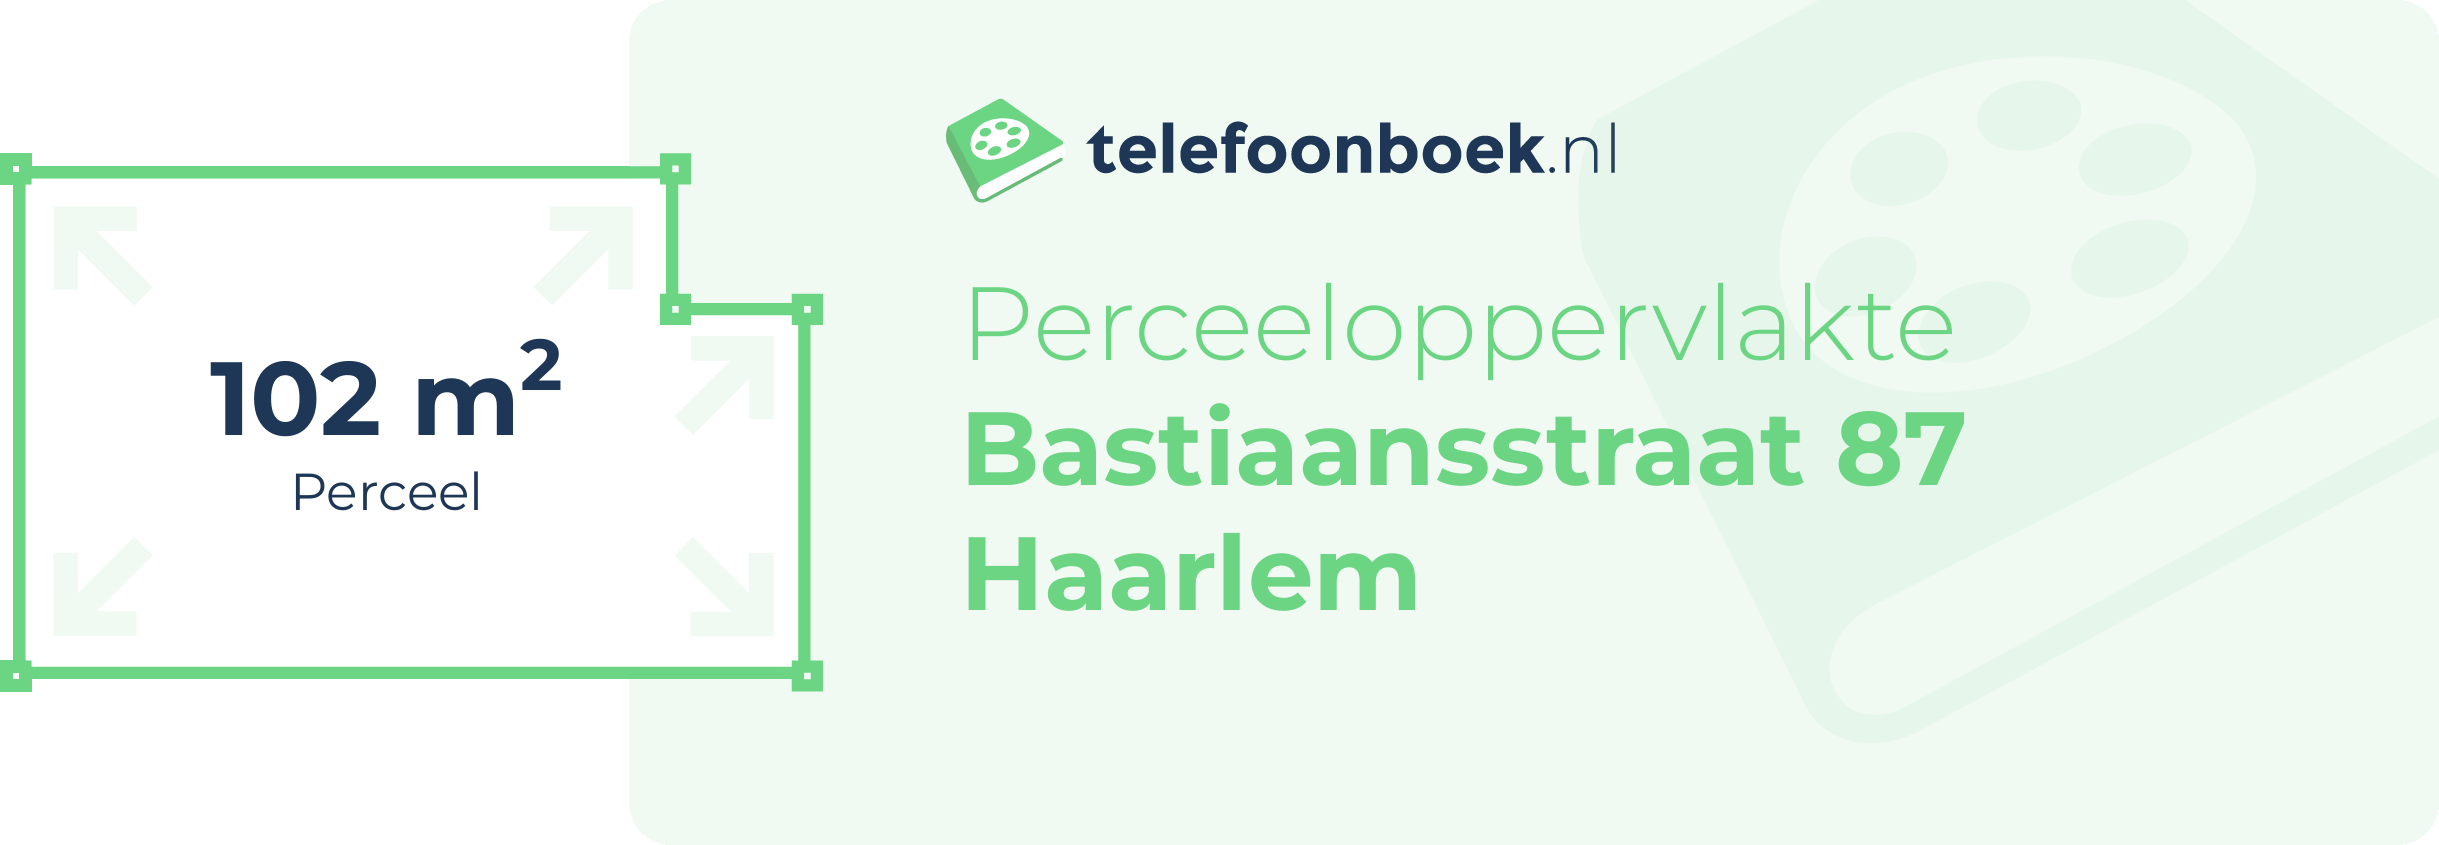 Perceeloppervlakte Bastiaansstraat 87 Haarlem